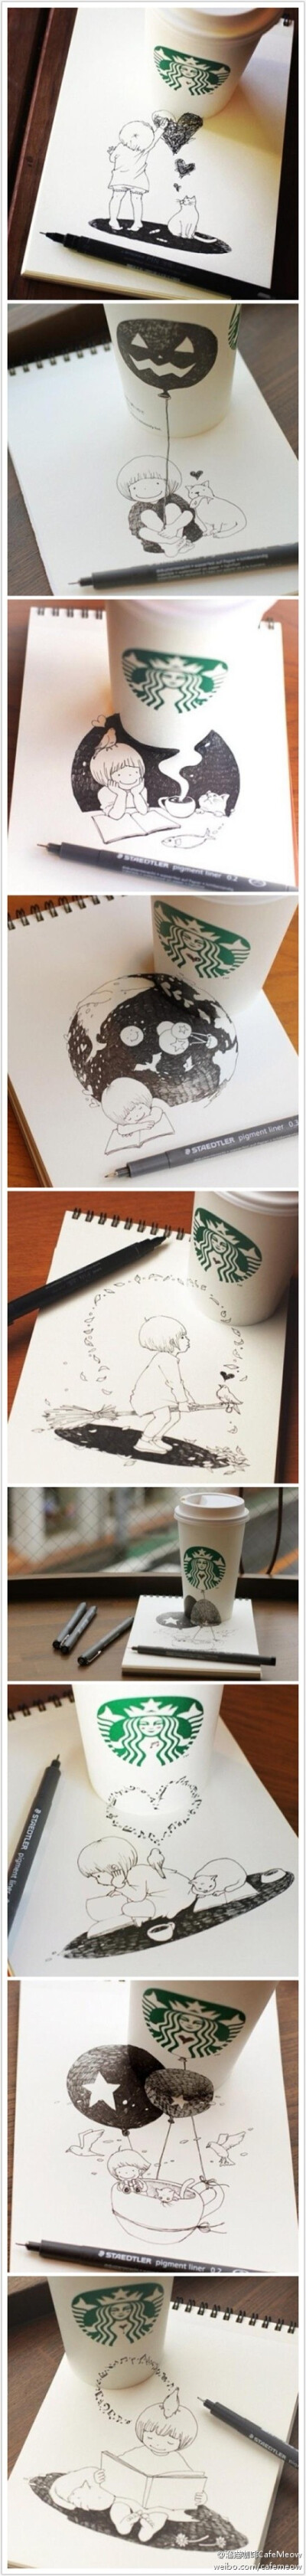 CafeMeow【猫插画】用星巴克杯画画~来自日本的Tomoko Shintani将喝完的咖啡纸杯与纸张结合在一起绘出互动的可爱插画，坐在咖啡店也不用那么的放空，随手拿起笔，也可以娱乐一番~